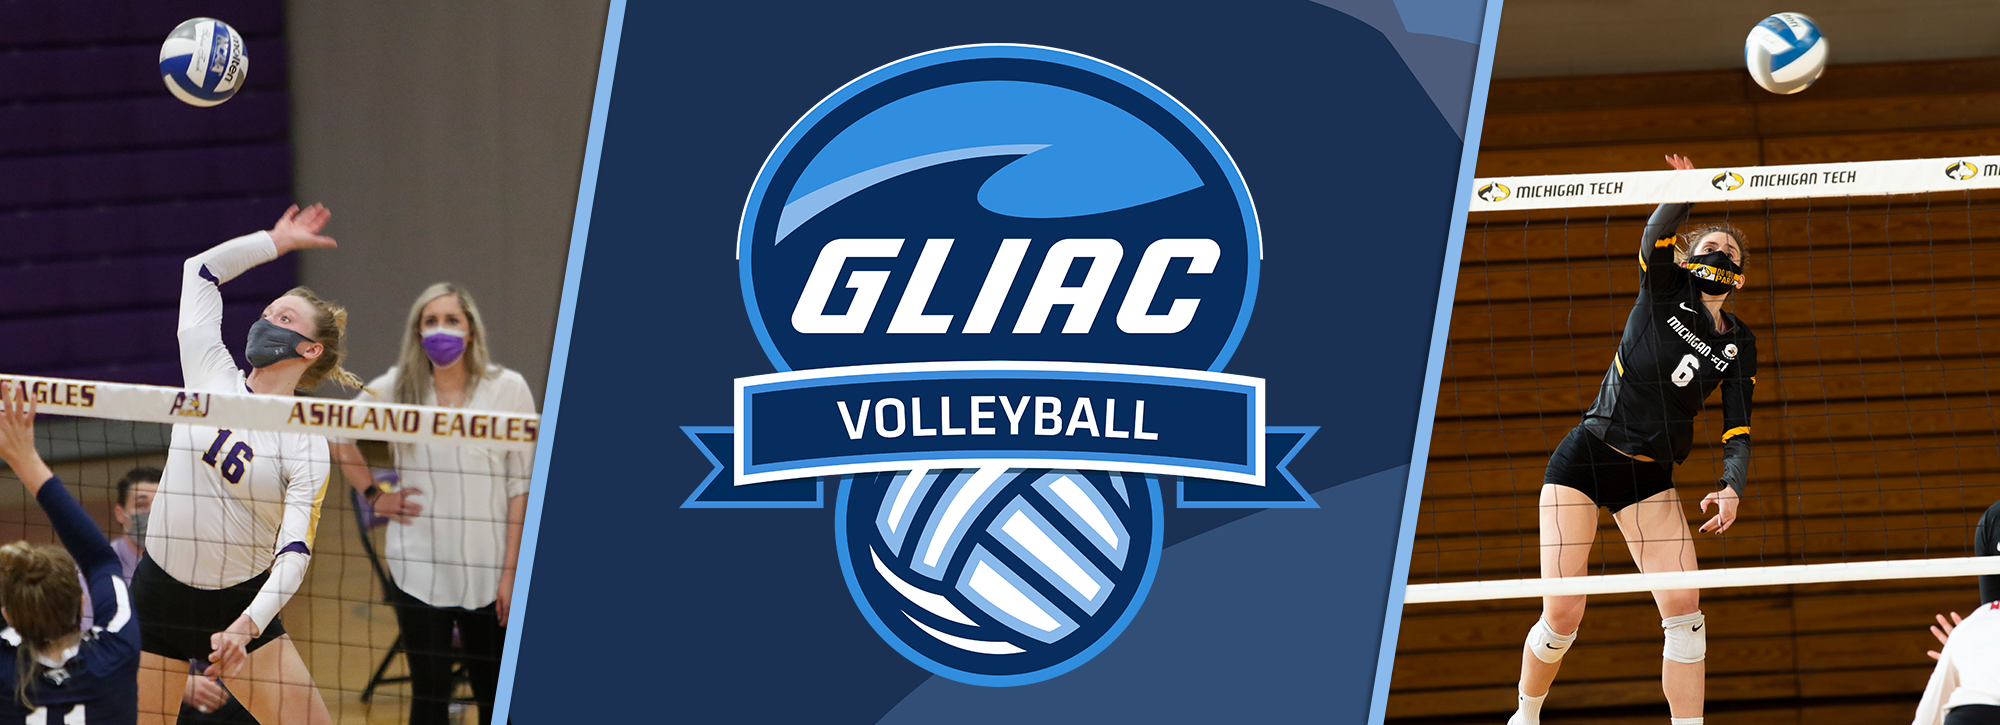 MTU's Jonynas, AU's Krupar Claim GLIAC Volleyball Players of the Week